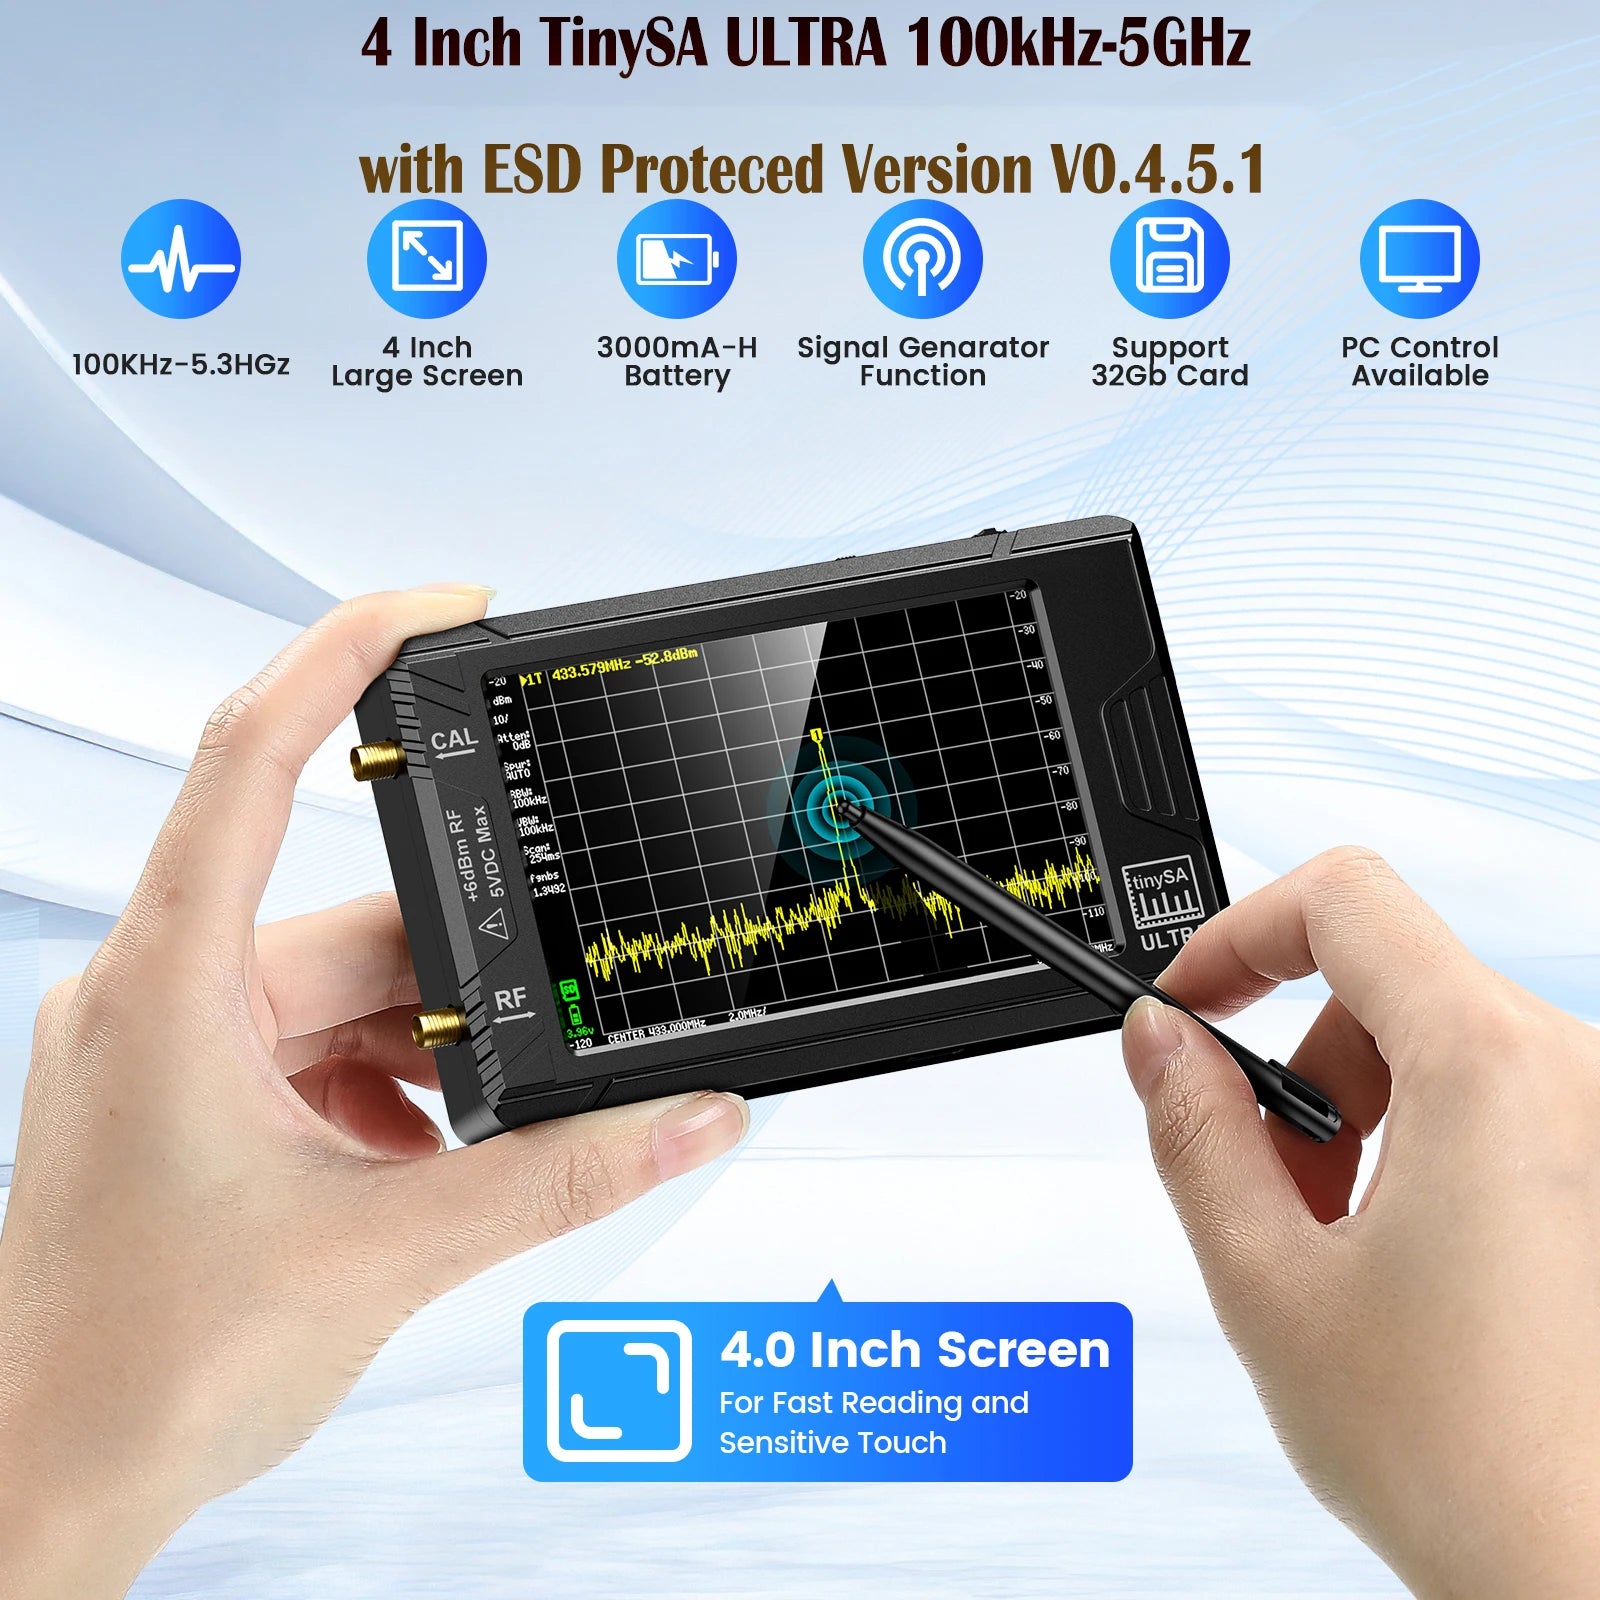 Spectrum Analyzer, 28/4 inch Display, 100kHz to 53GHz Range